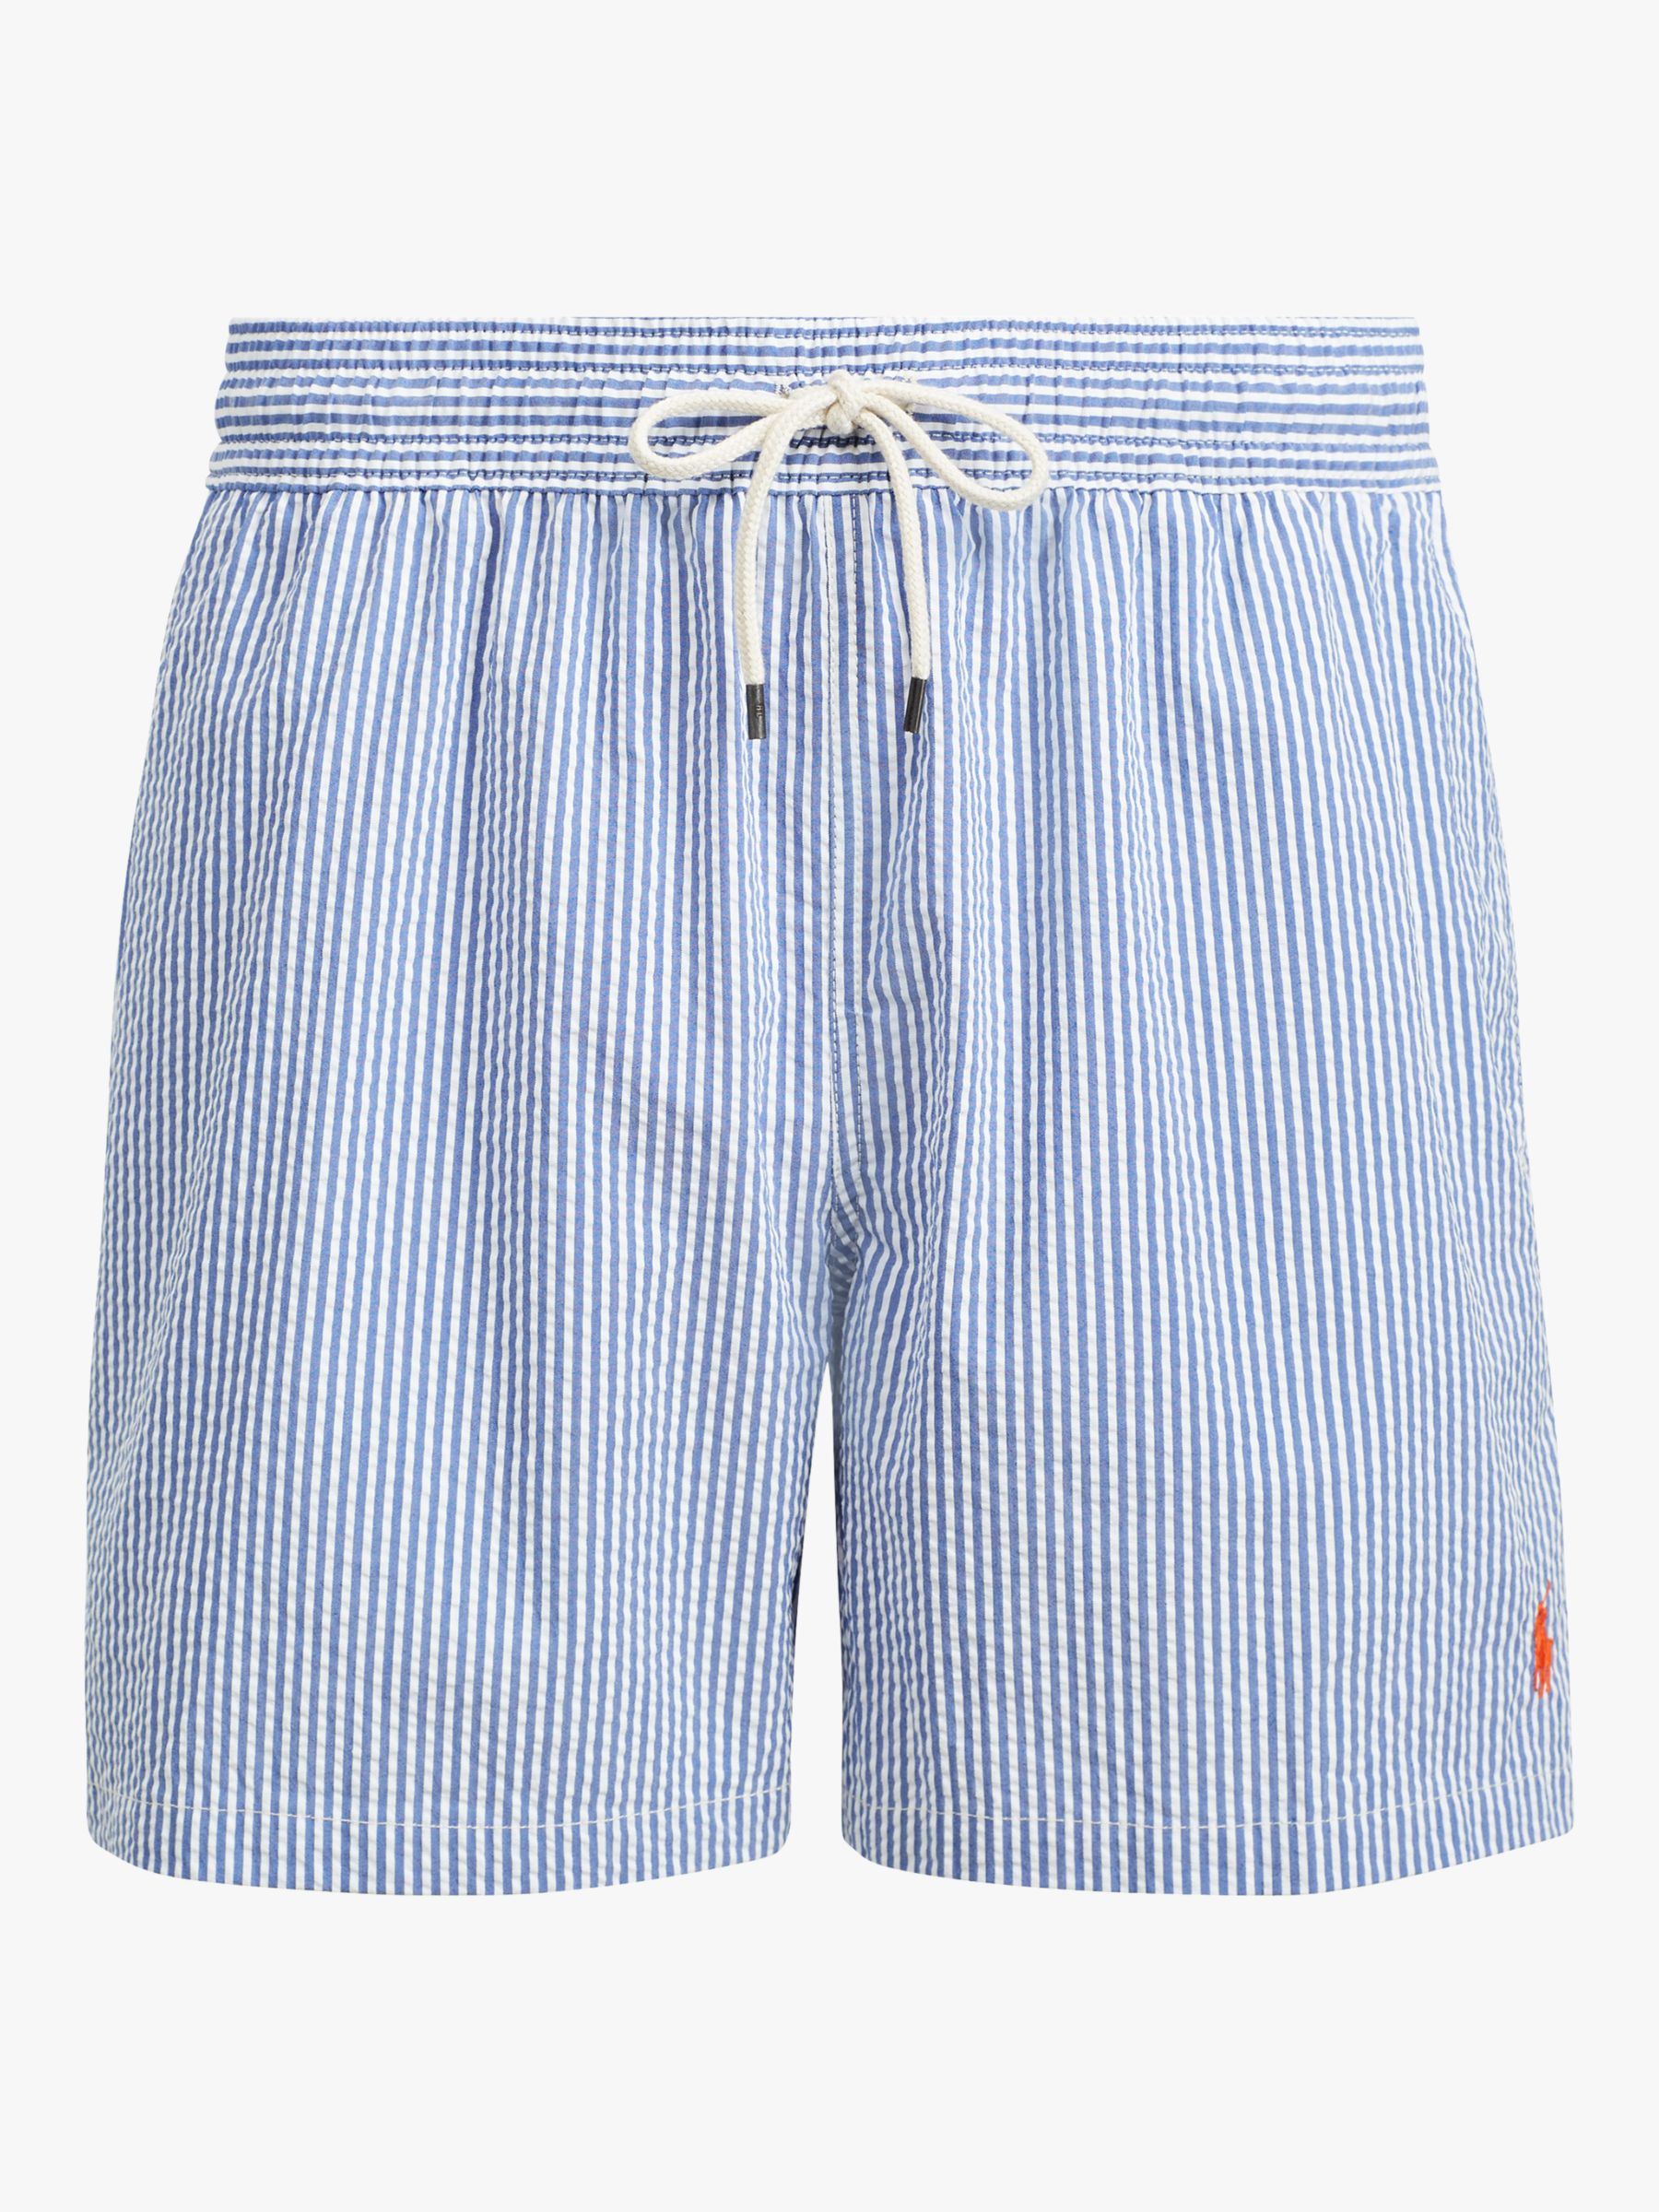 ralph lauren striped swim shorts